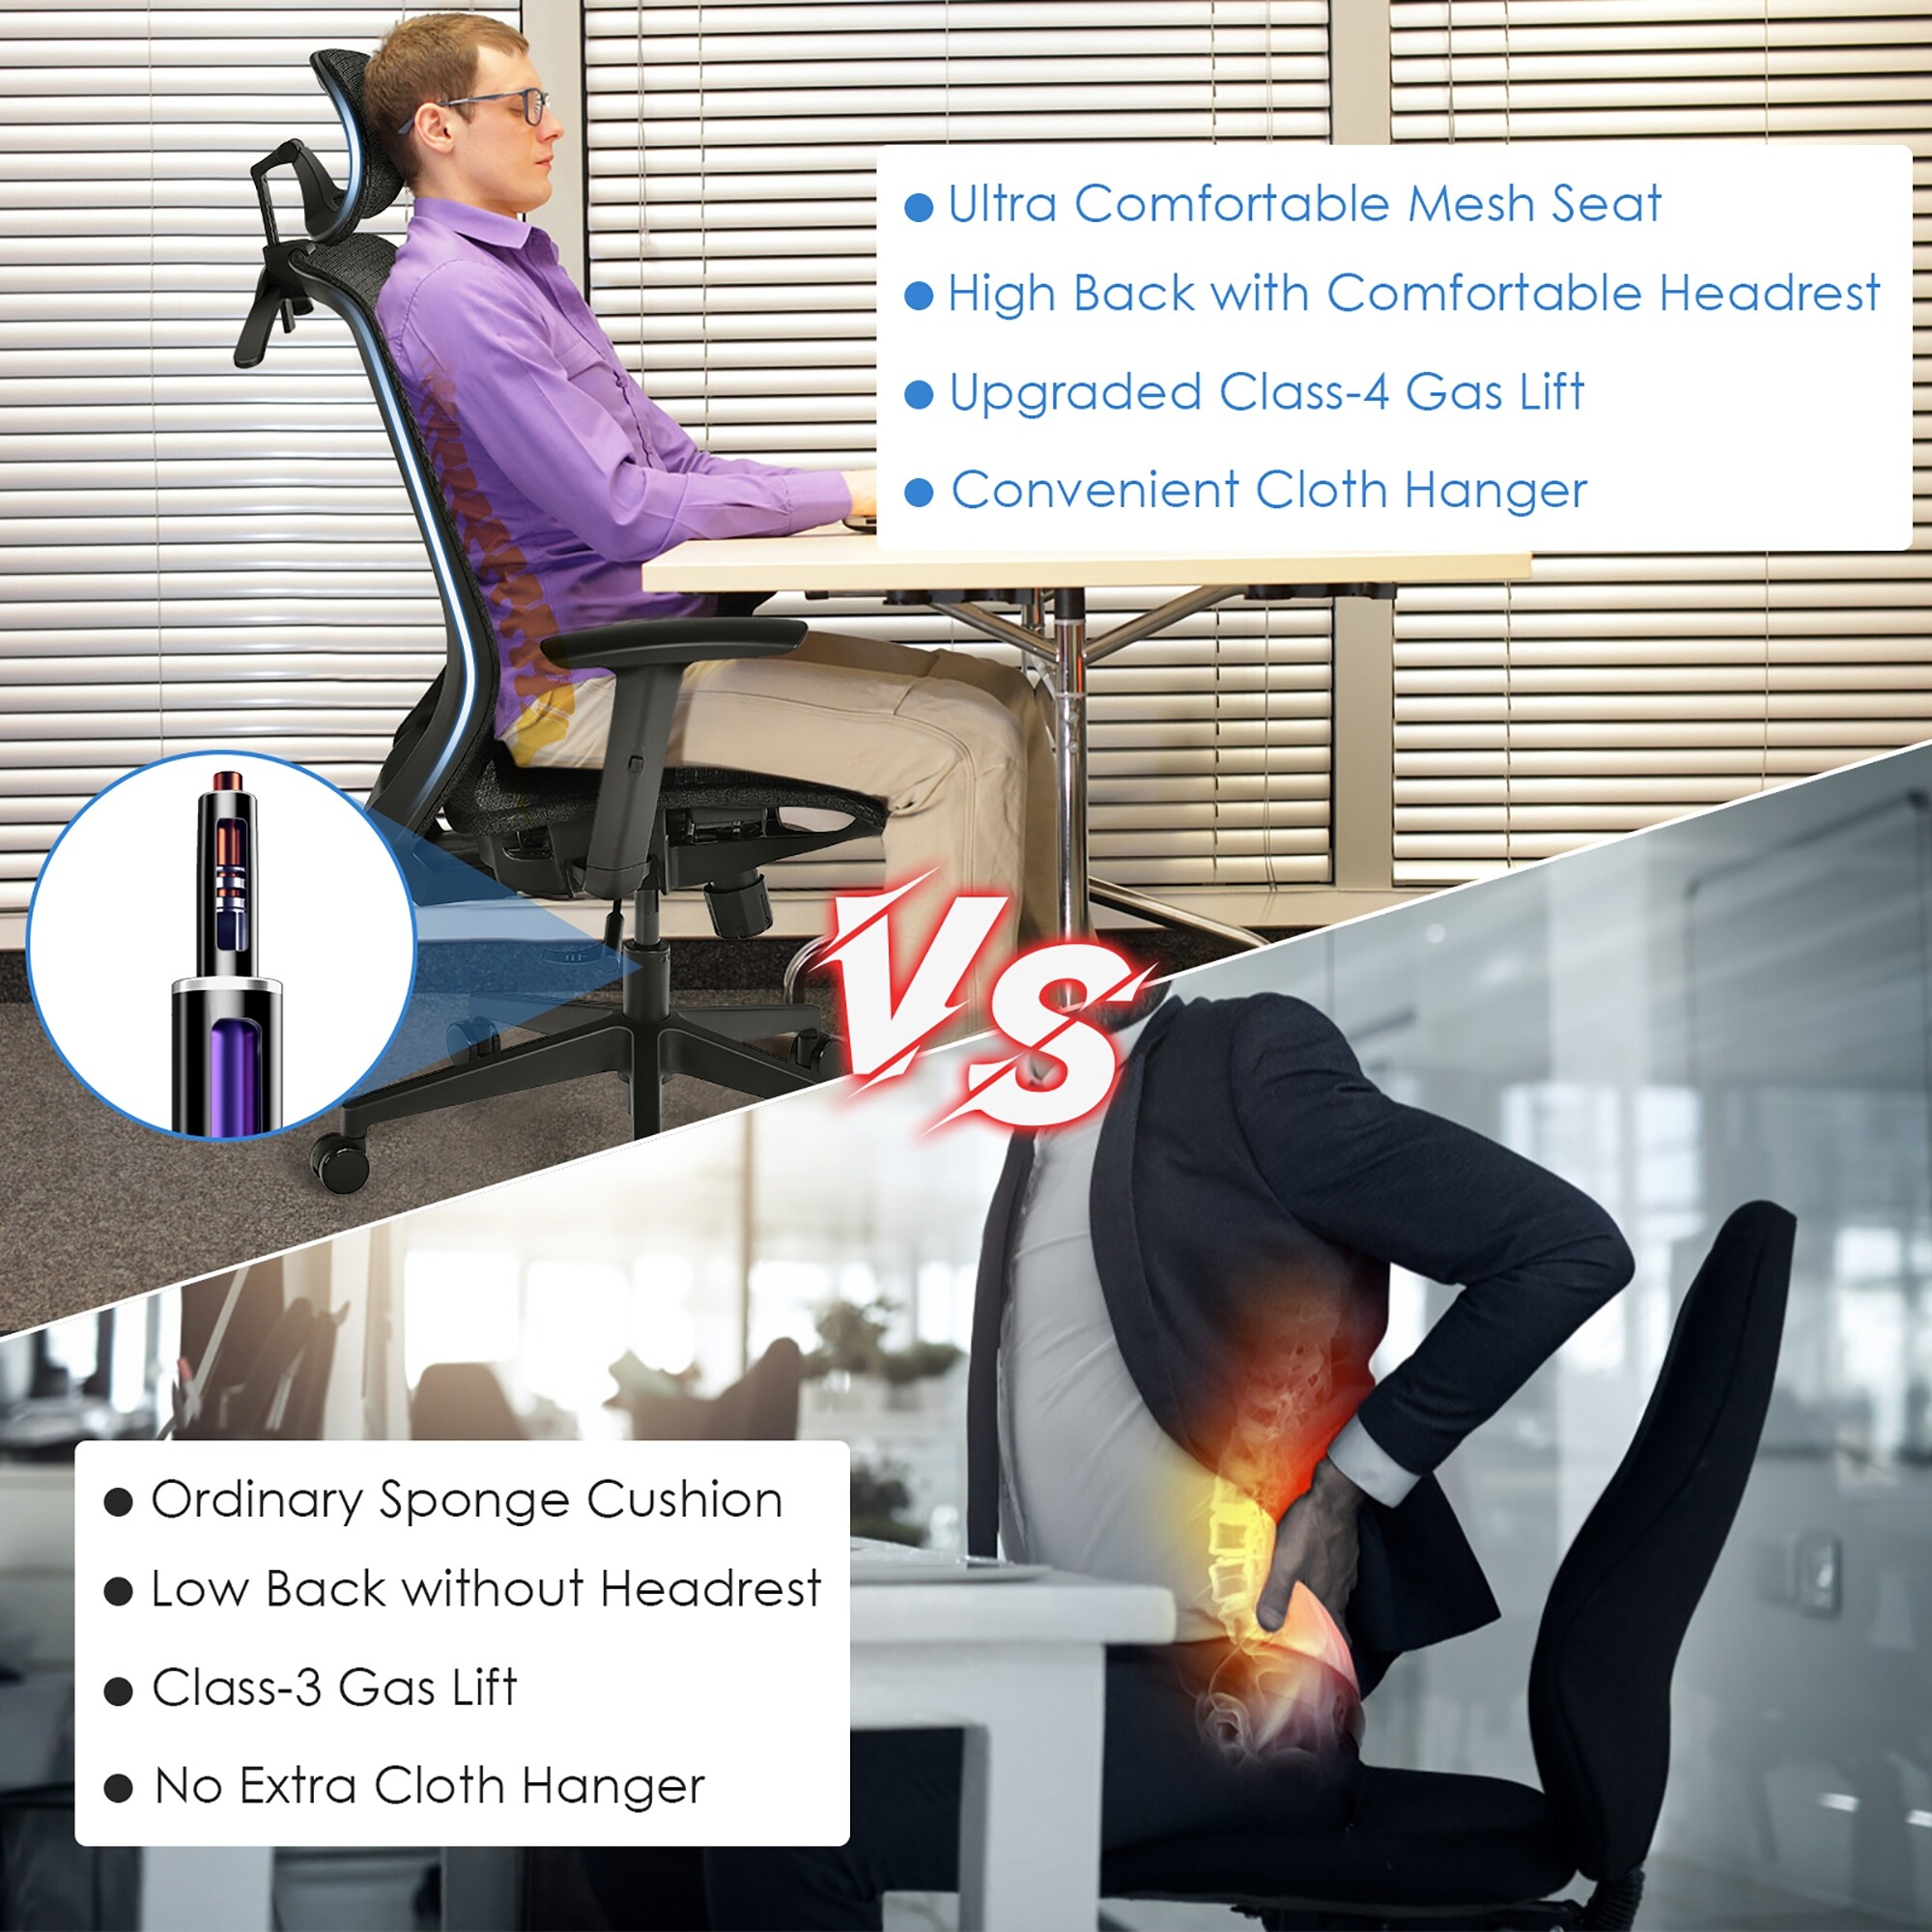 https://ak1.ostkcdn.com/images/products/is/images/direct/968979ed866b2da480a8db1733158229b8edf8e5/Costway-Ergonomic-High-Back-Mesh-Office-Chair-Recliner-Task-Chair.jpg